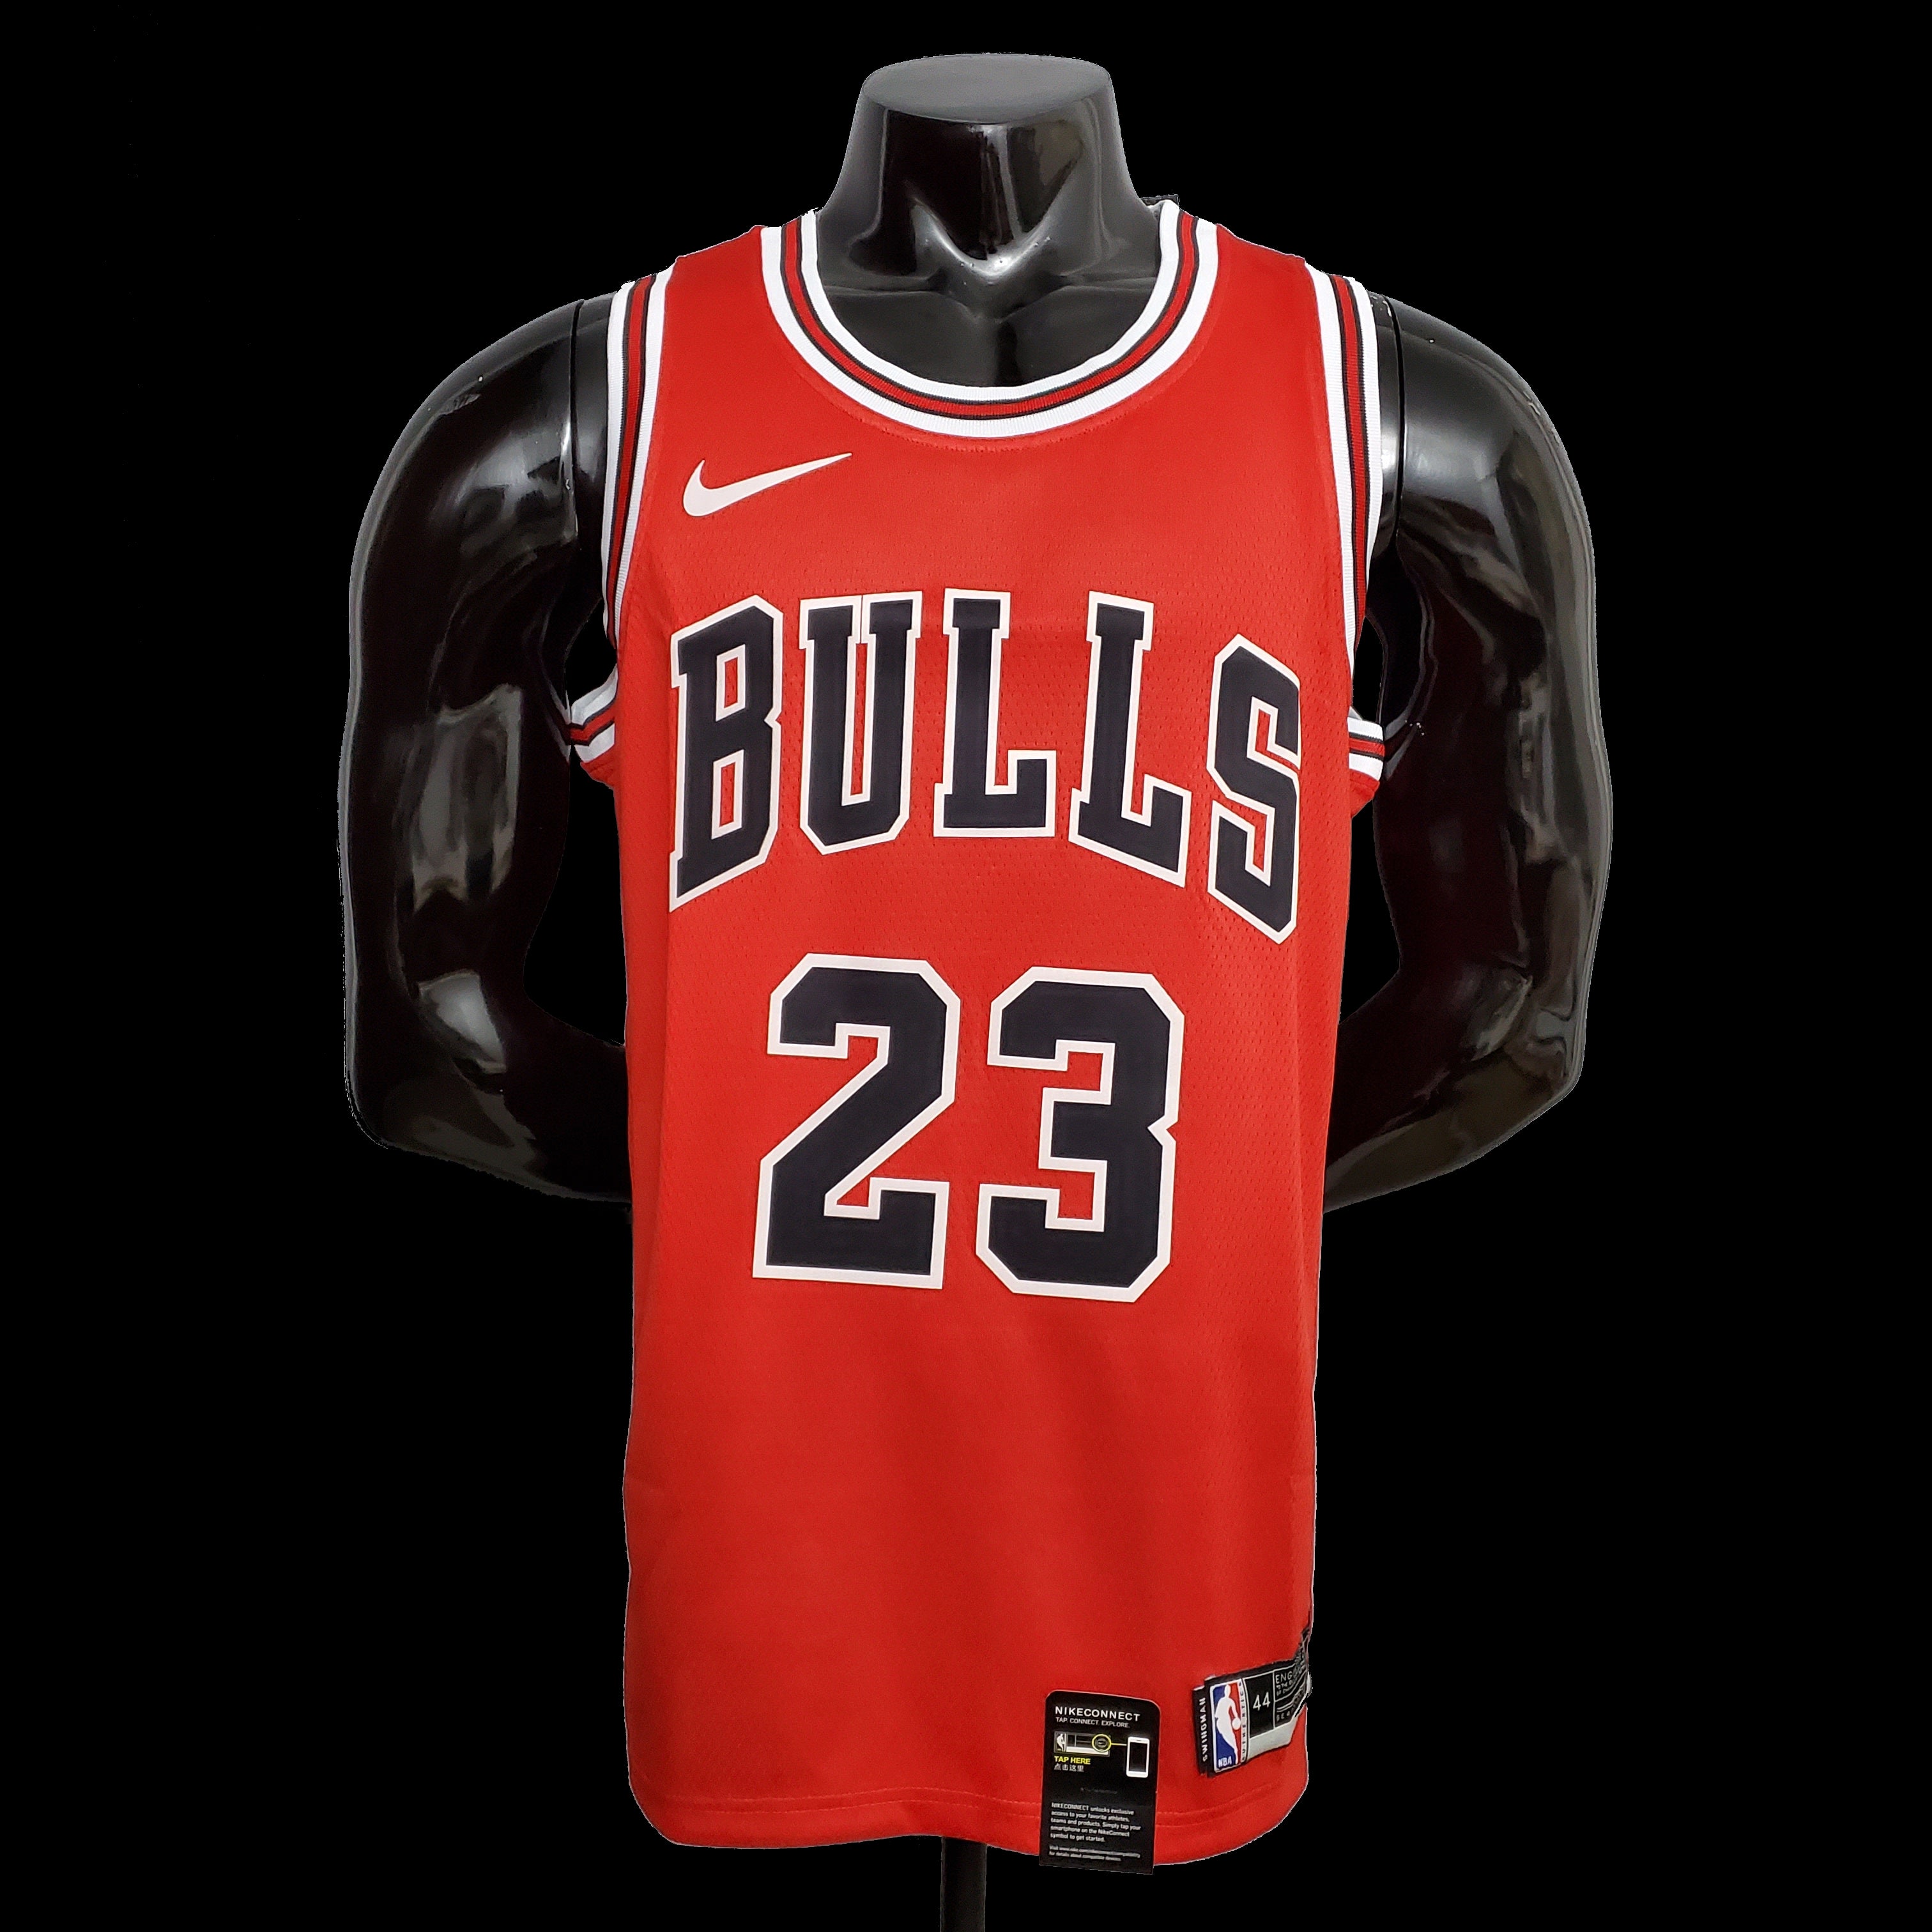 Michael Jordan Chicago Bulls #23 NBA Swingman Jersey Red, NWT Adult Large